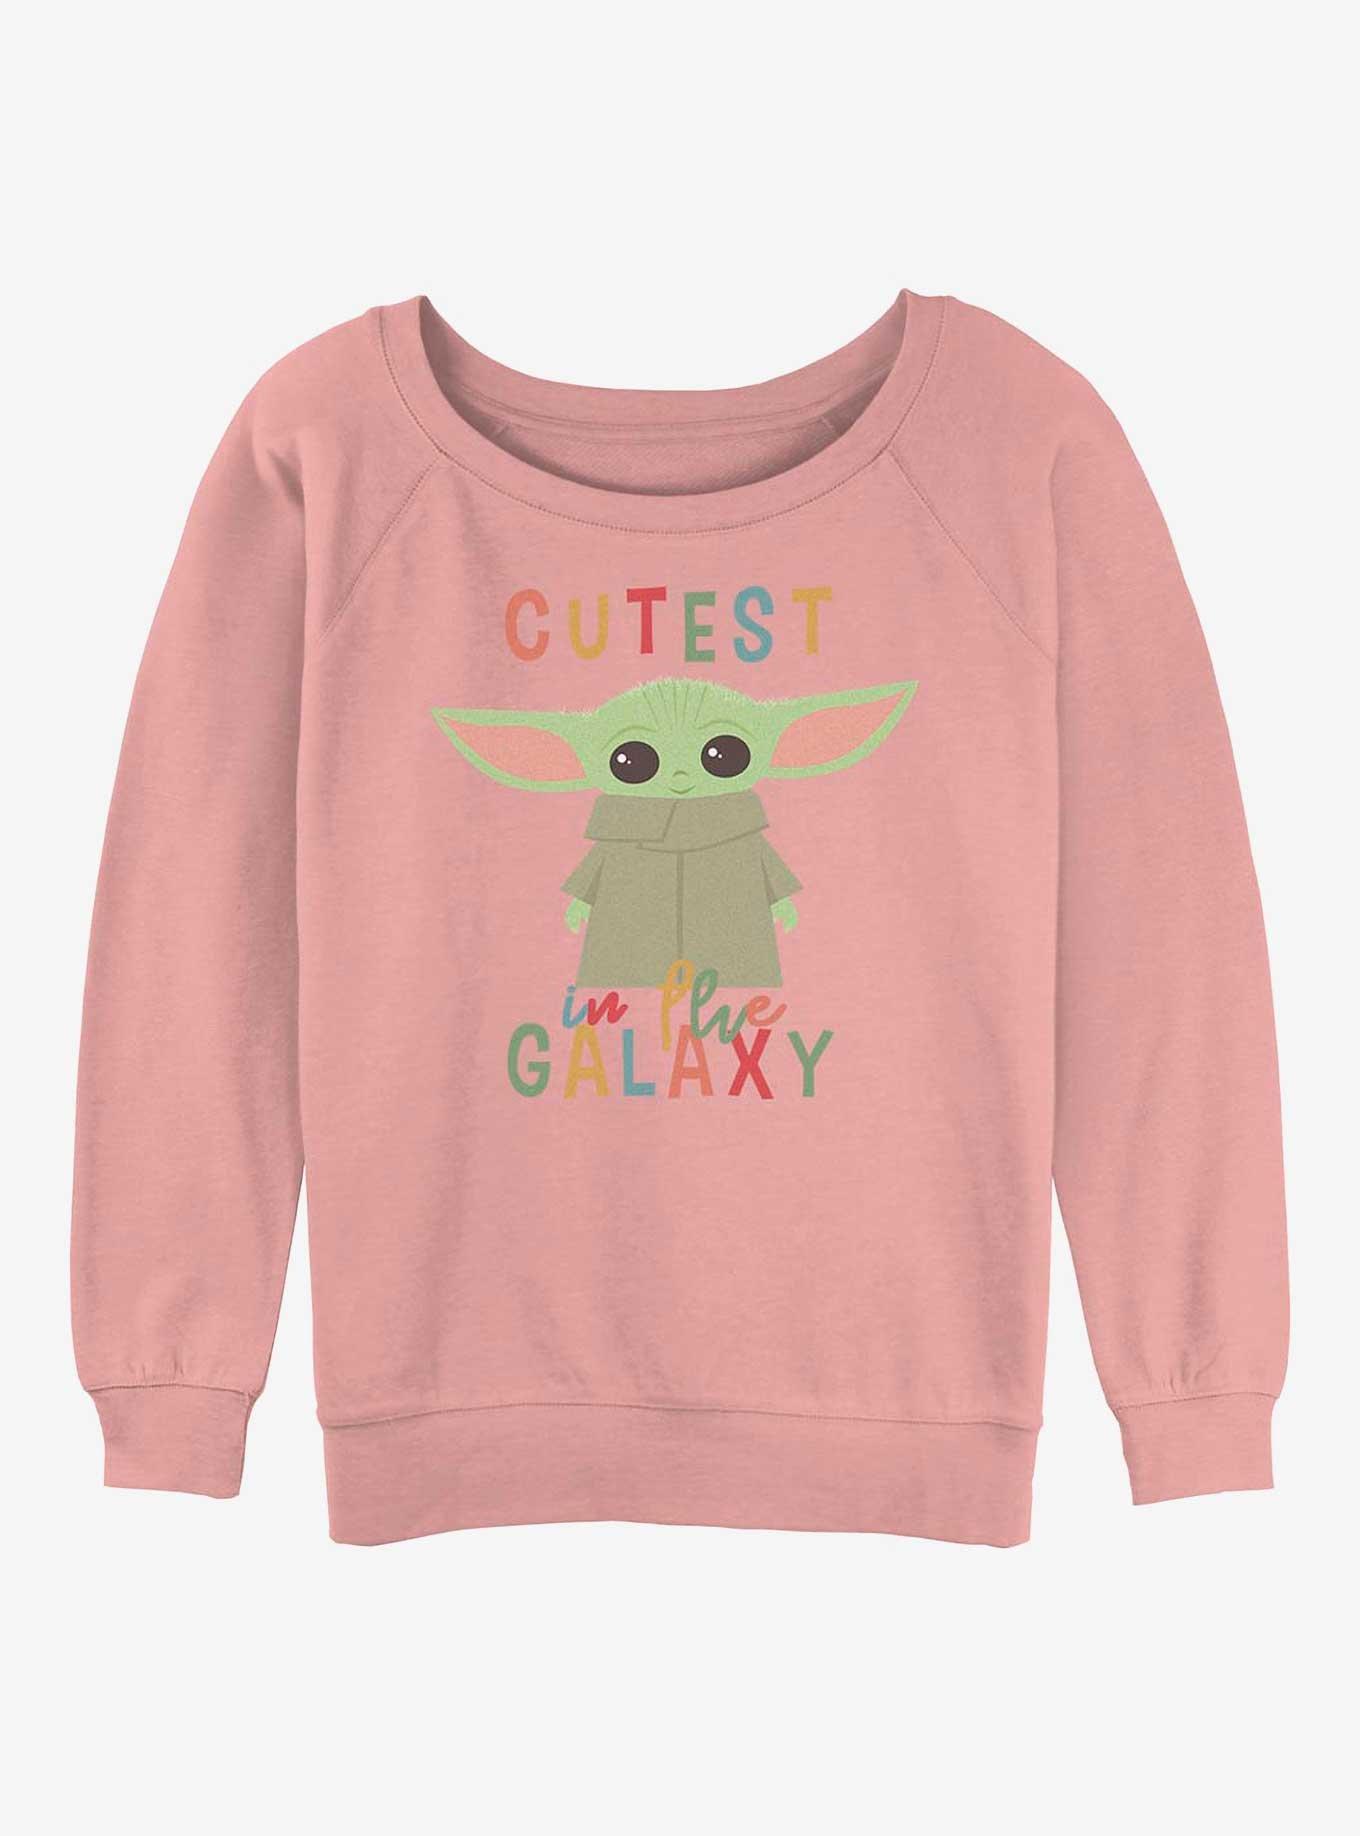 Star Wars The Mandalorian Cutest Child in the Galaxy Girls Slouchy Sweatshirt, , hi-res